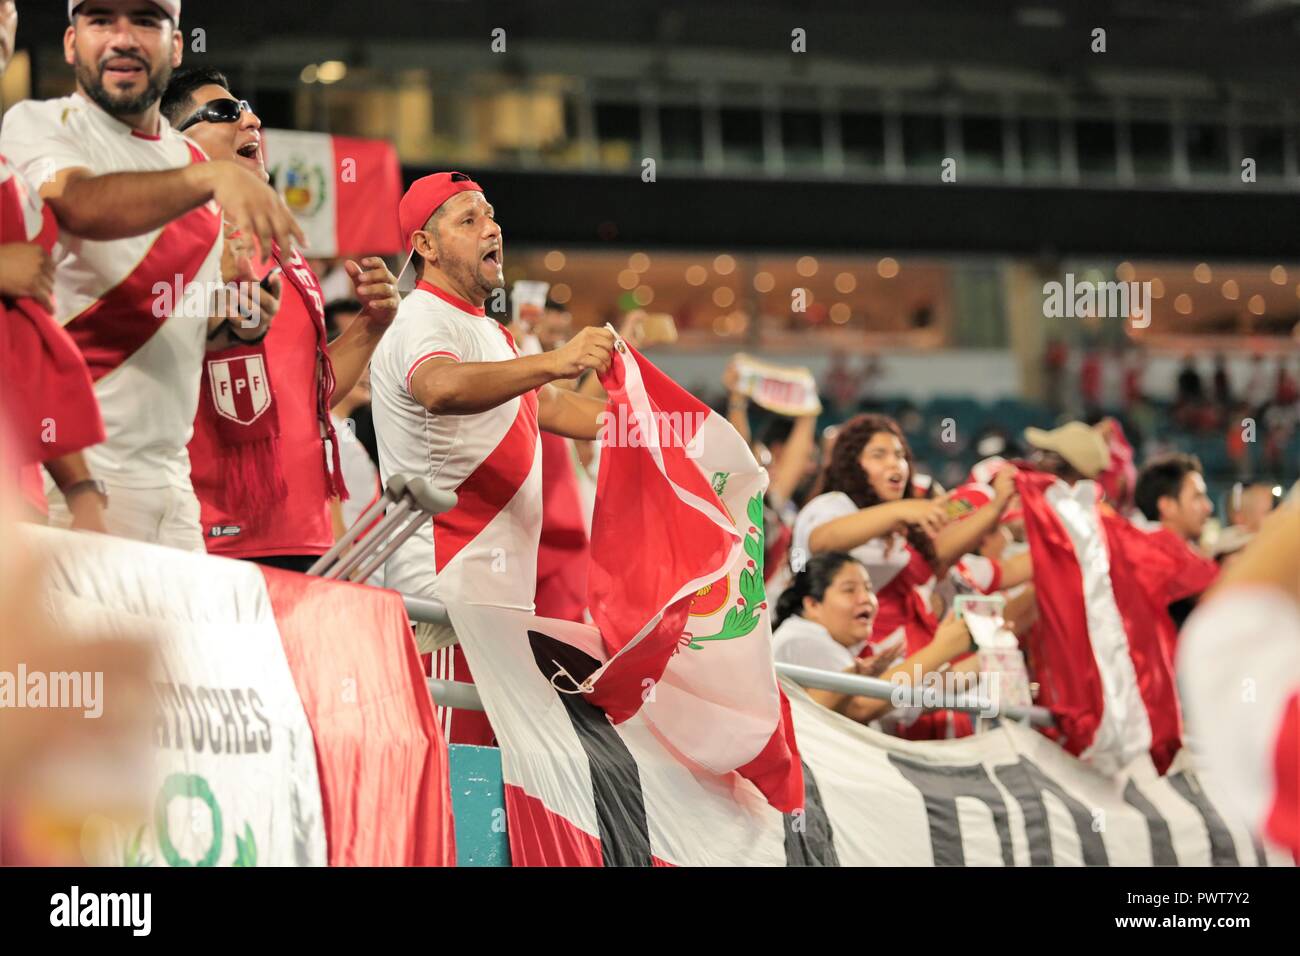 Miami, Florida. 12th Oct, 2018. Soccer fans during Chile vs Peru at Hard Rock Stadium in Miami, Florida. Oct 12, 2018.  Peru won 3-0. Stock Photo